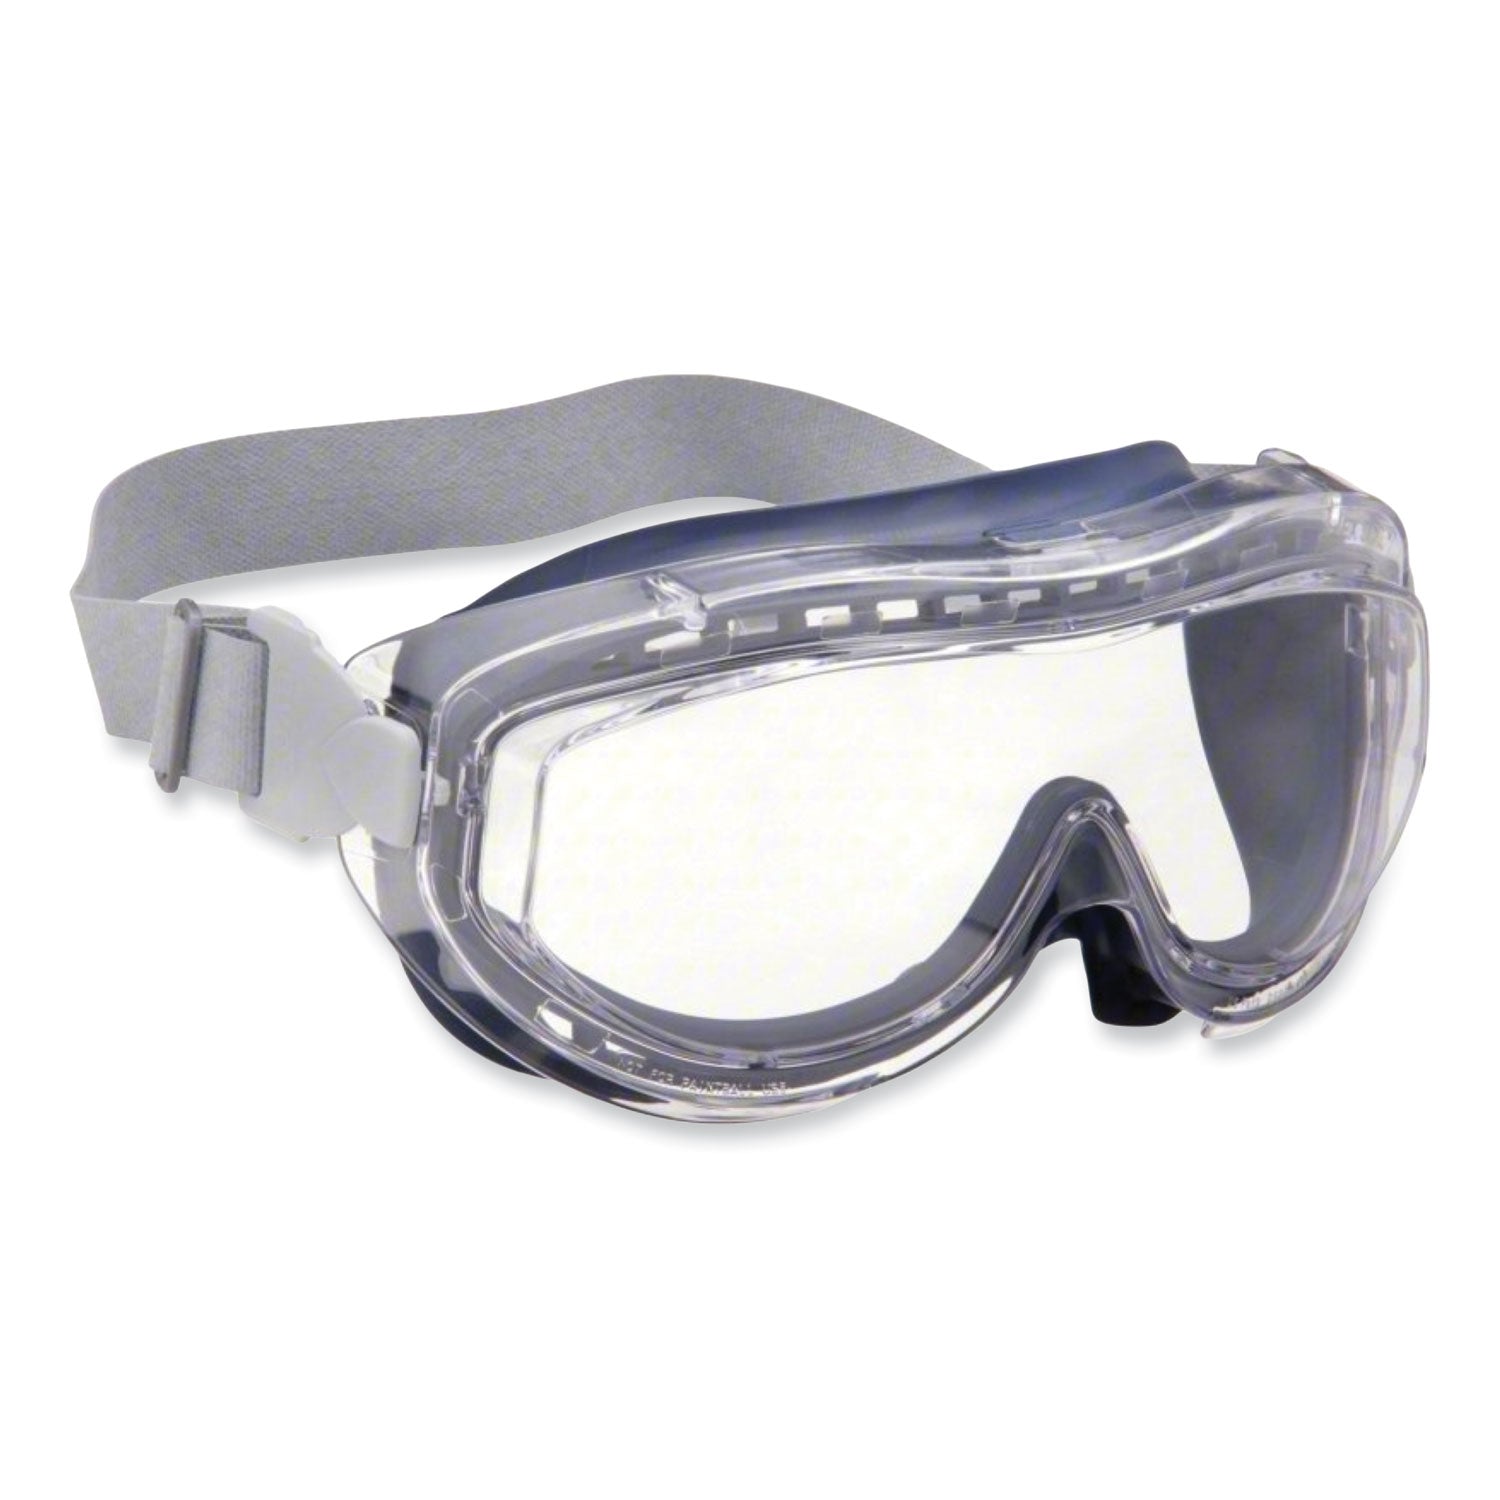 flex-seal-otg-goggles-clear-hydroshield-anti-fog-anti-scratch-lens-clear-navy-gray-frame_uvxs3400hs - 1